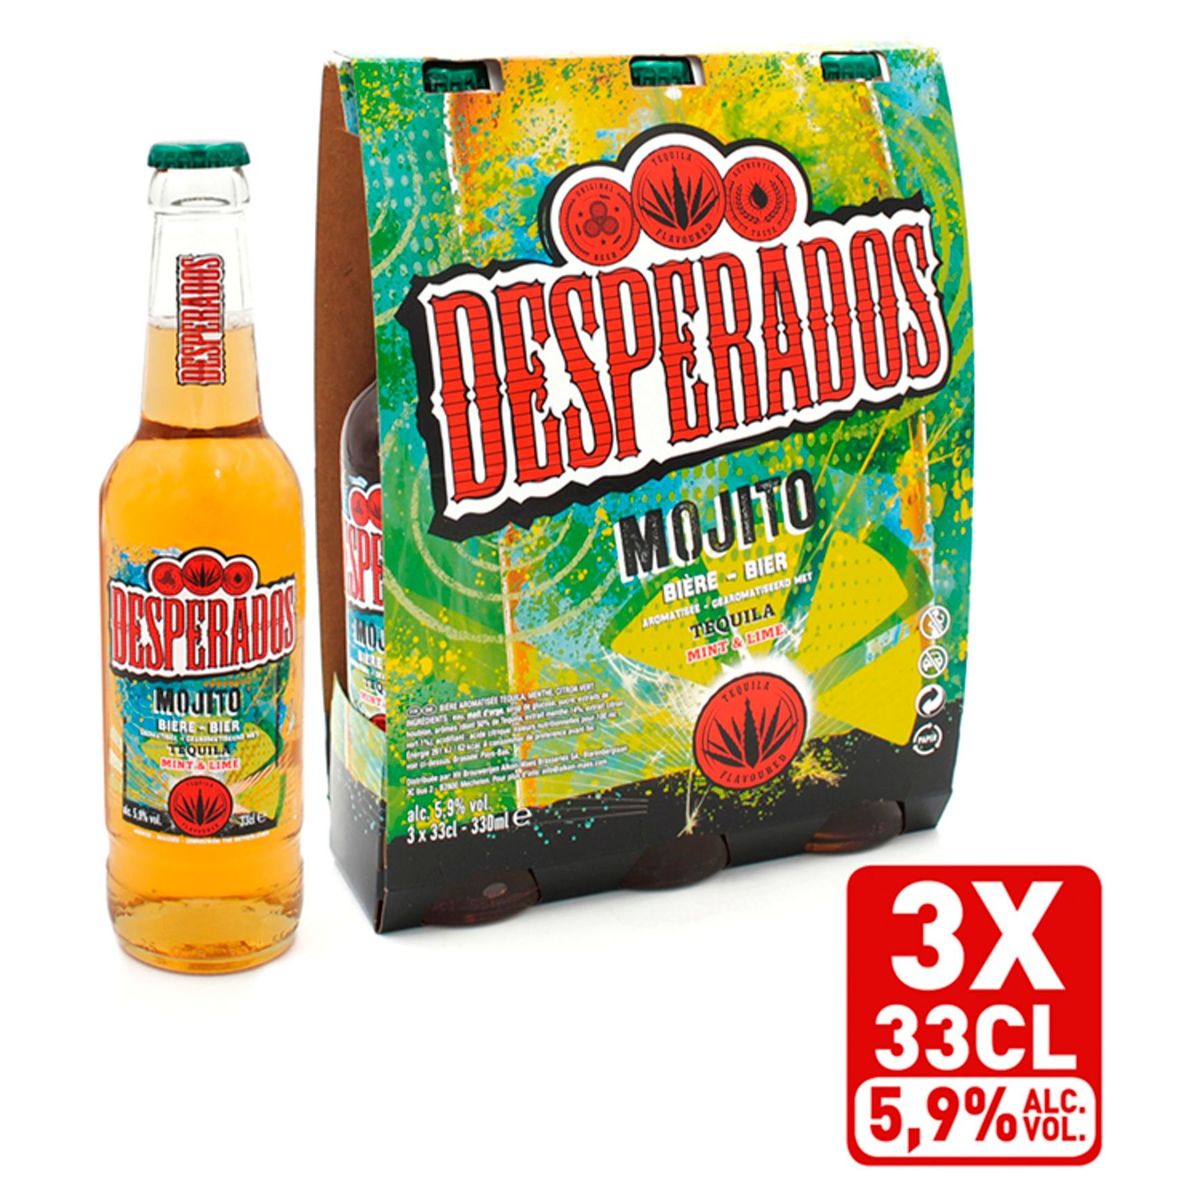 Desperados Bière Tequila-Mojito 5.9% ALC Bouteille 3x33cl